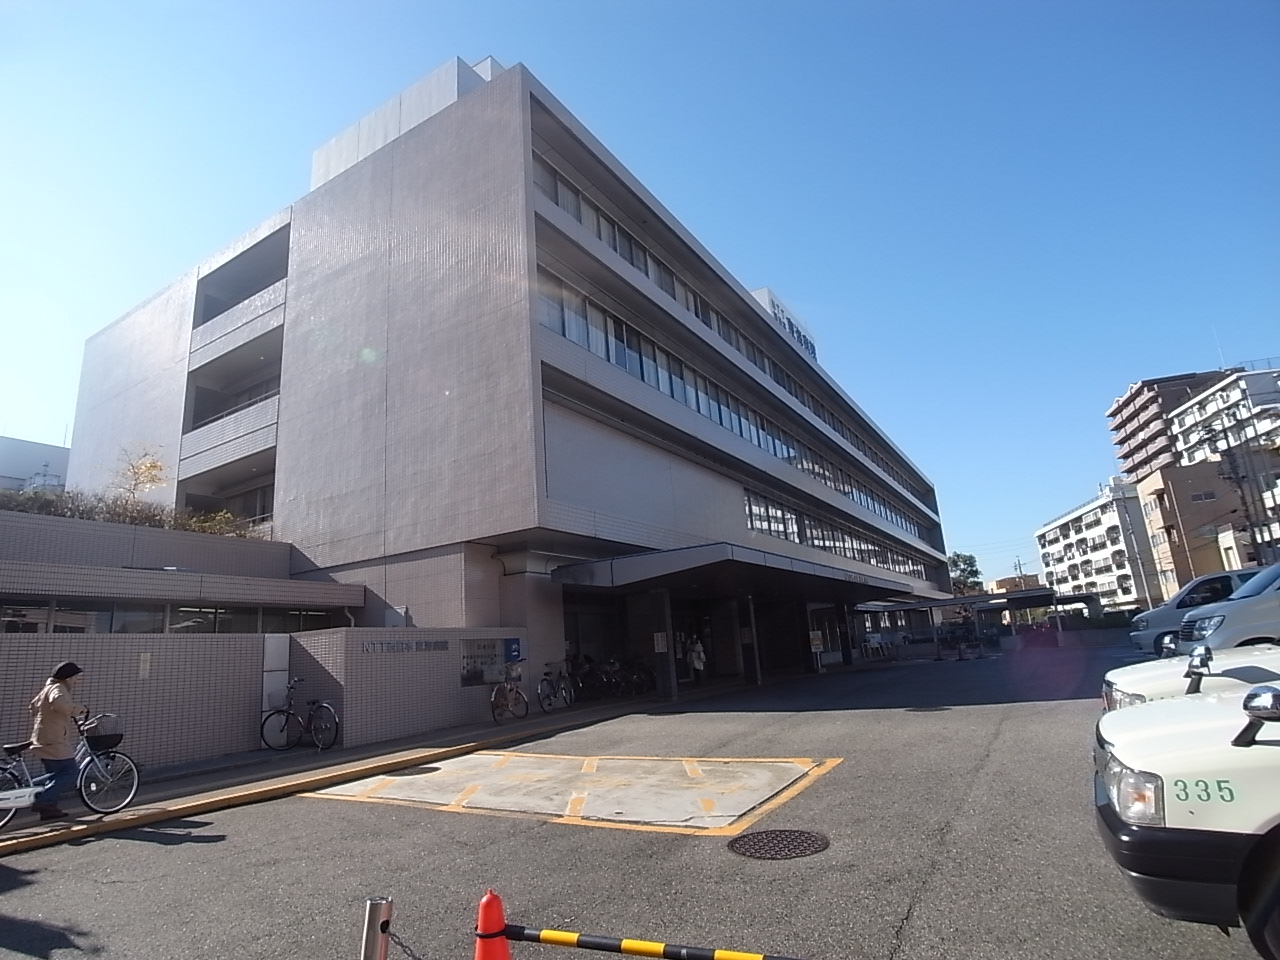 Hospital. NTT West Tokai hospital 847m (General Hospital) to (hospital)